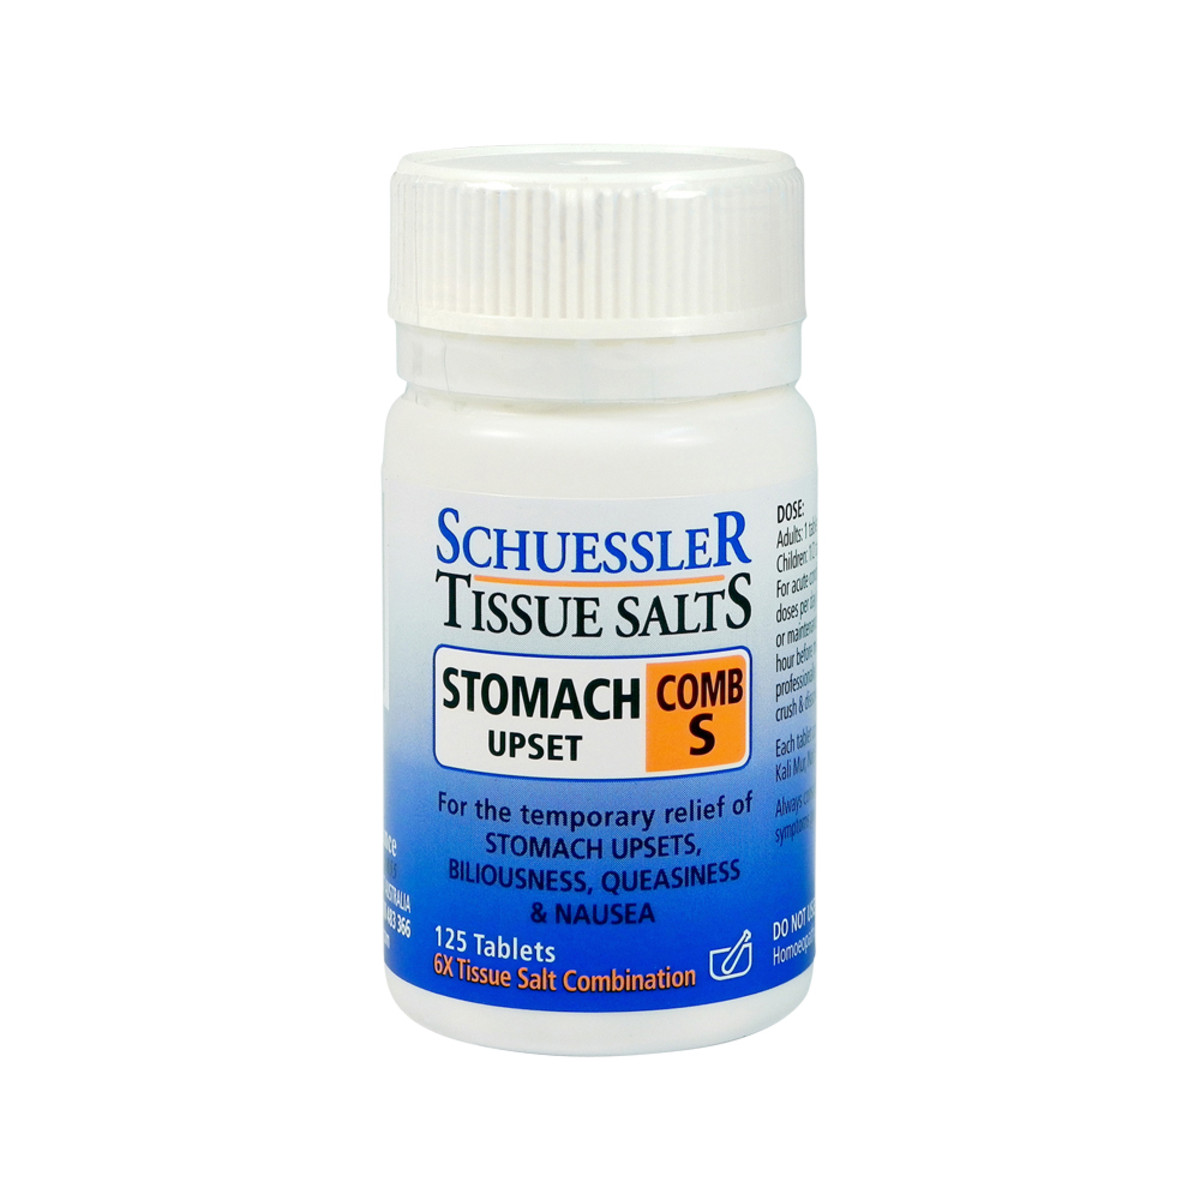 Schuessler Tissue Salts Comb S (Stomach Upset) 125t